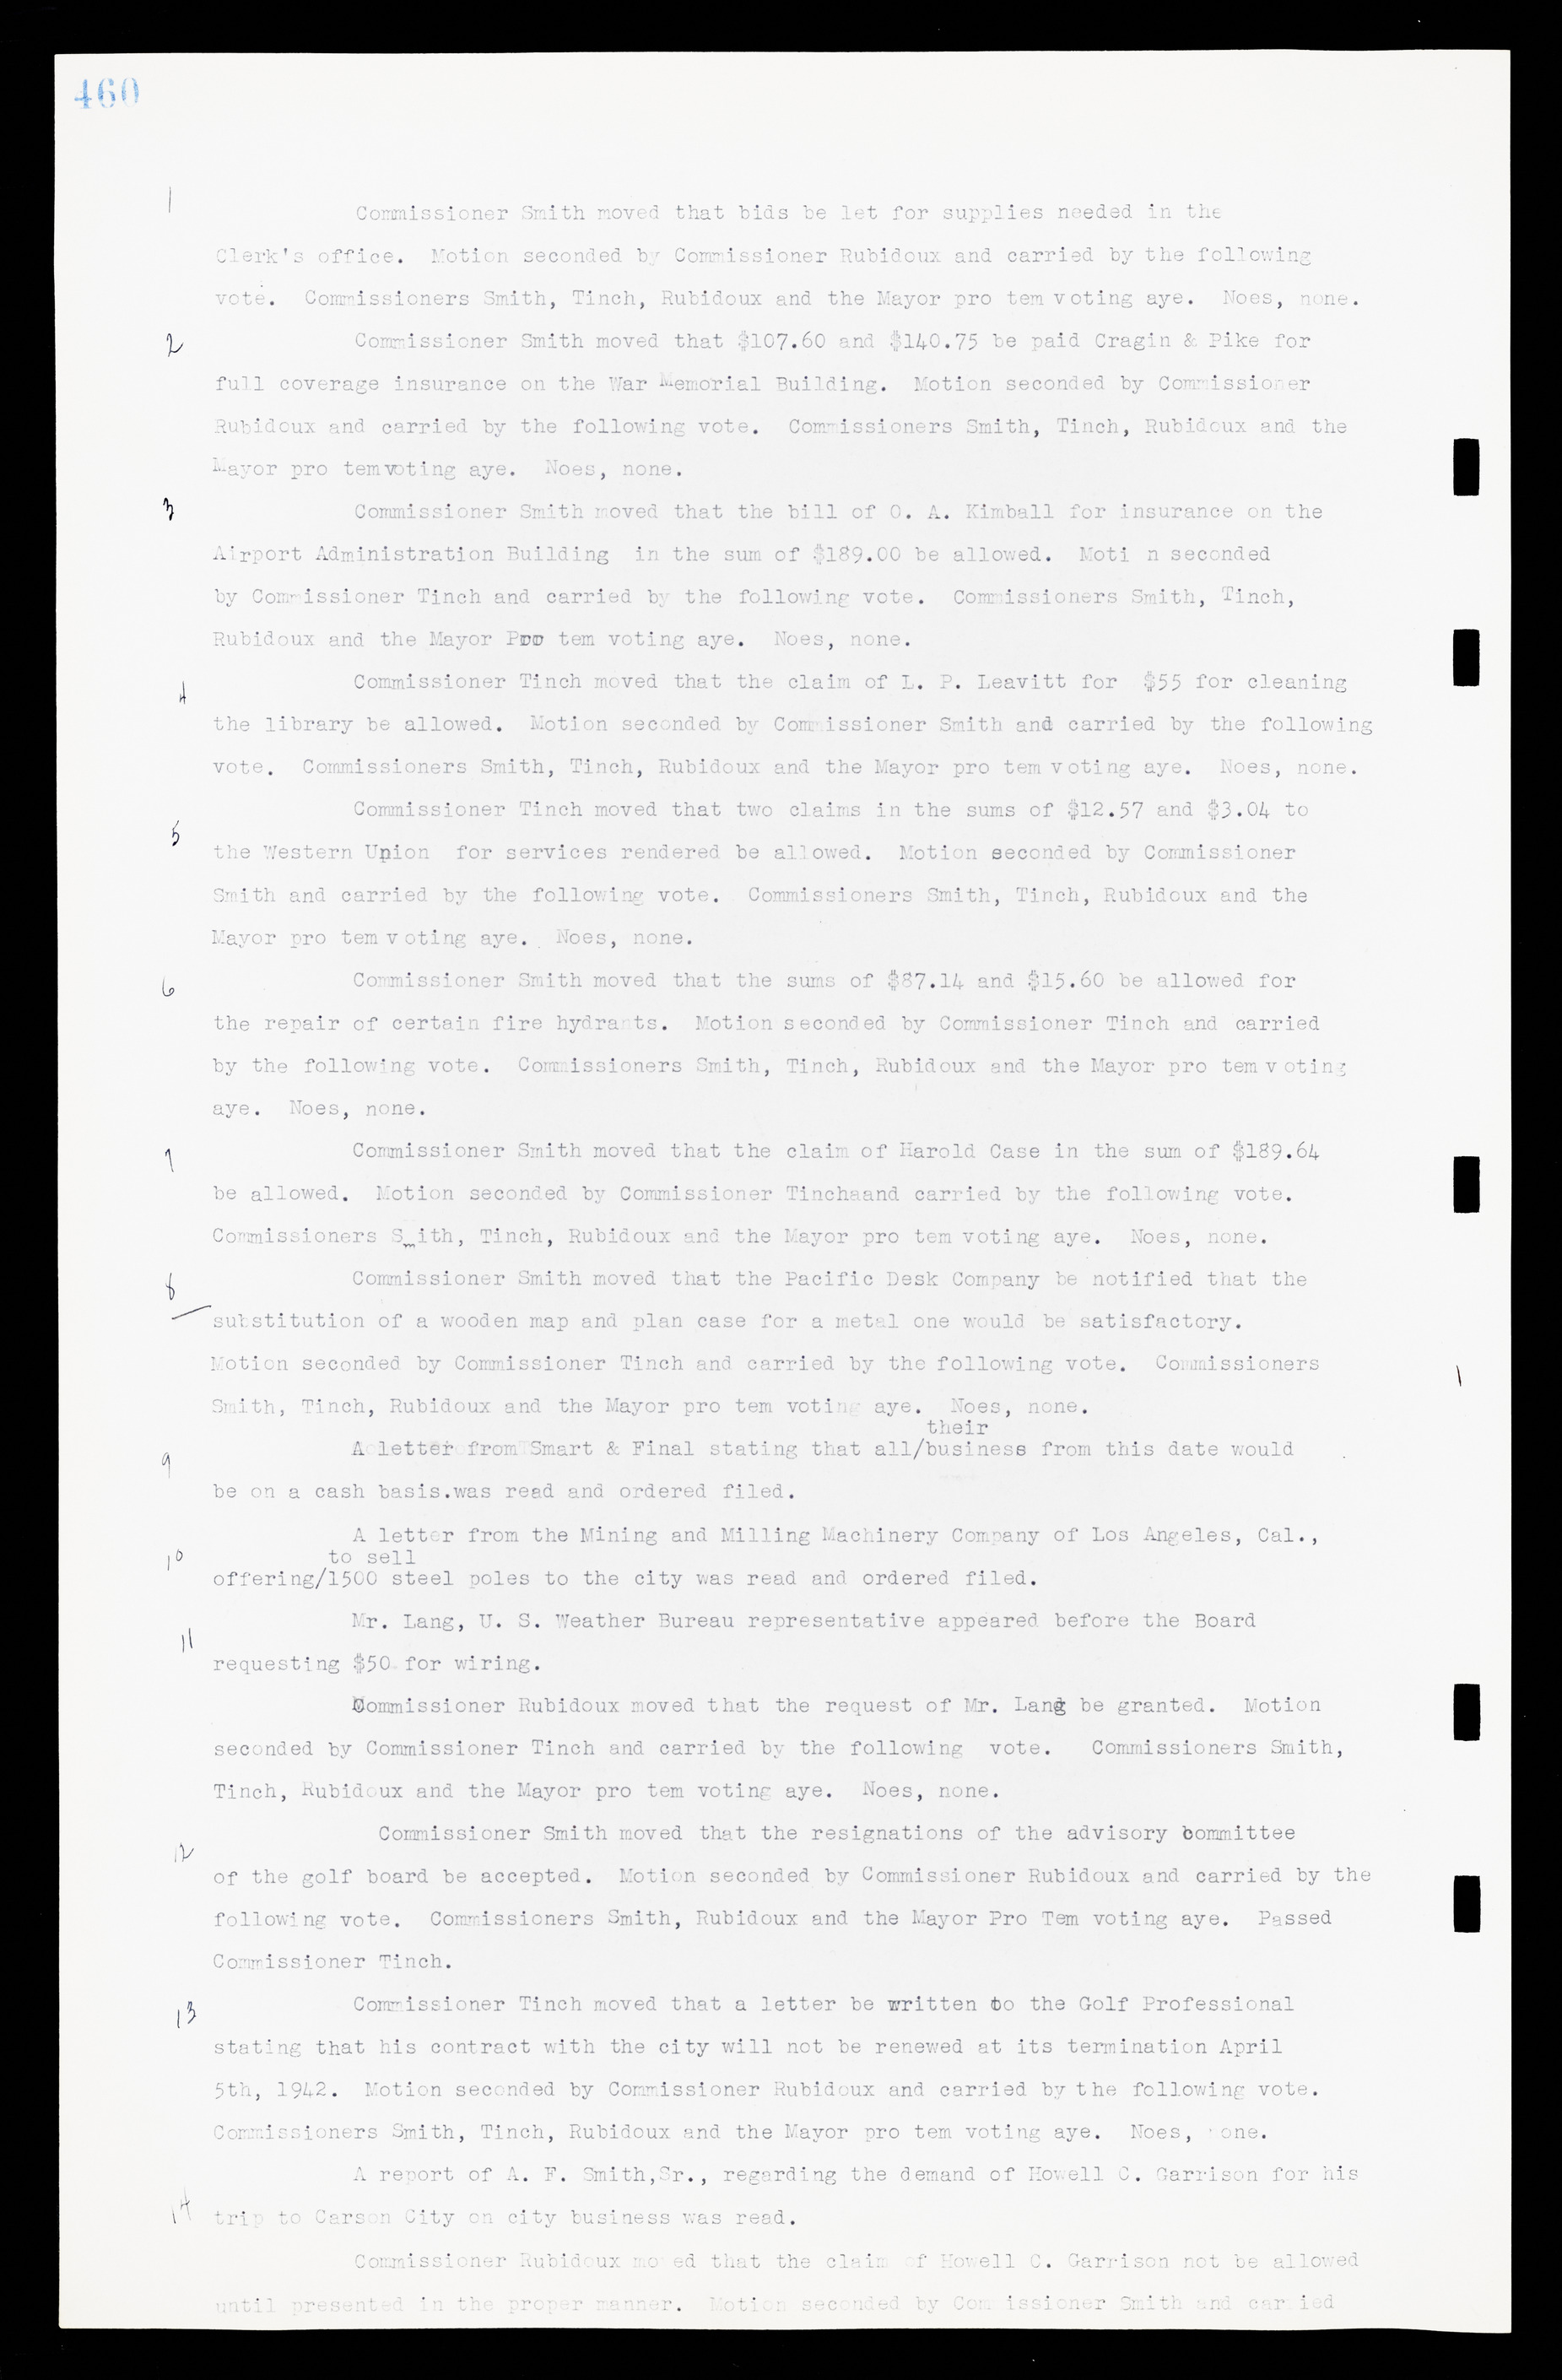 Las Vegas City Commission Minutes, February 17, 1937 to August 4, 1942, lvc000004-488